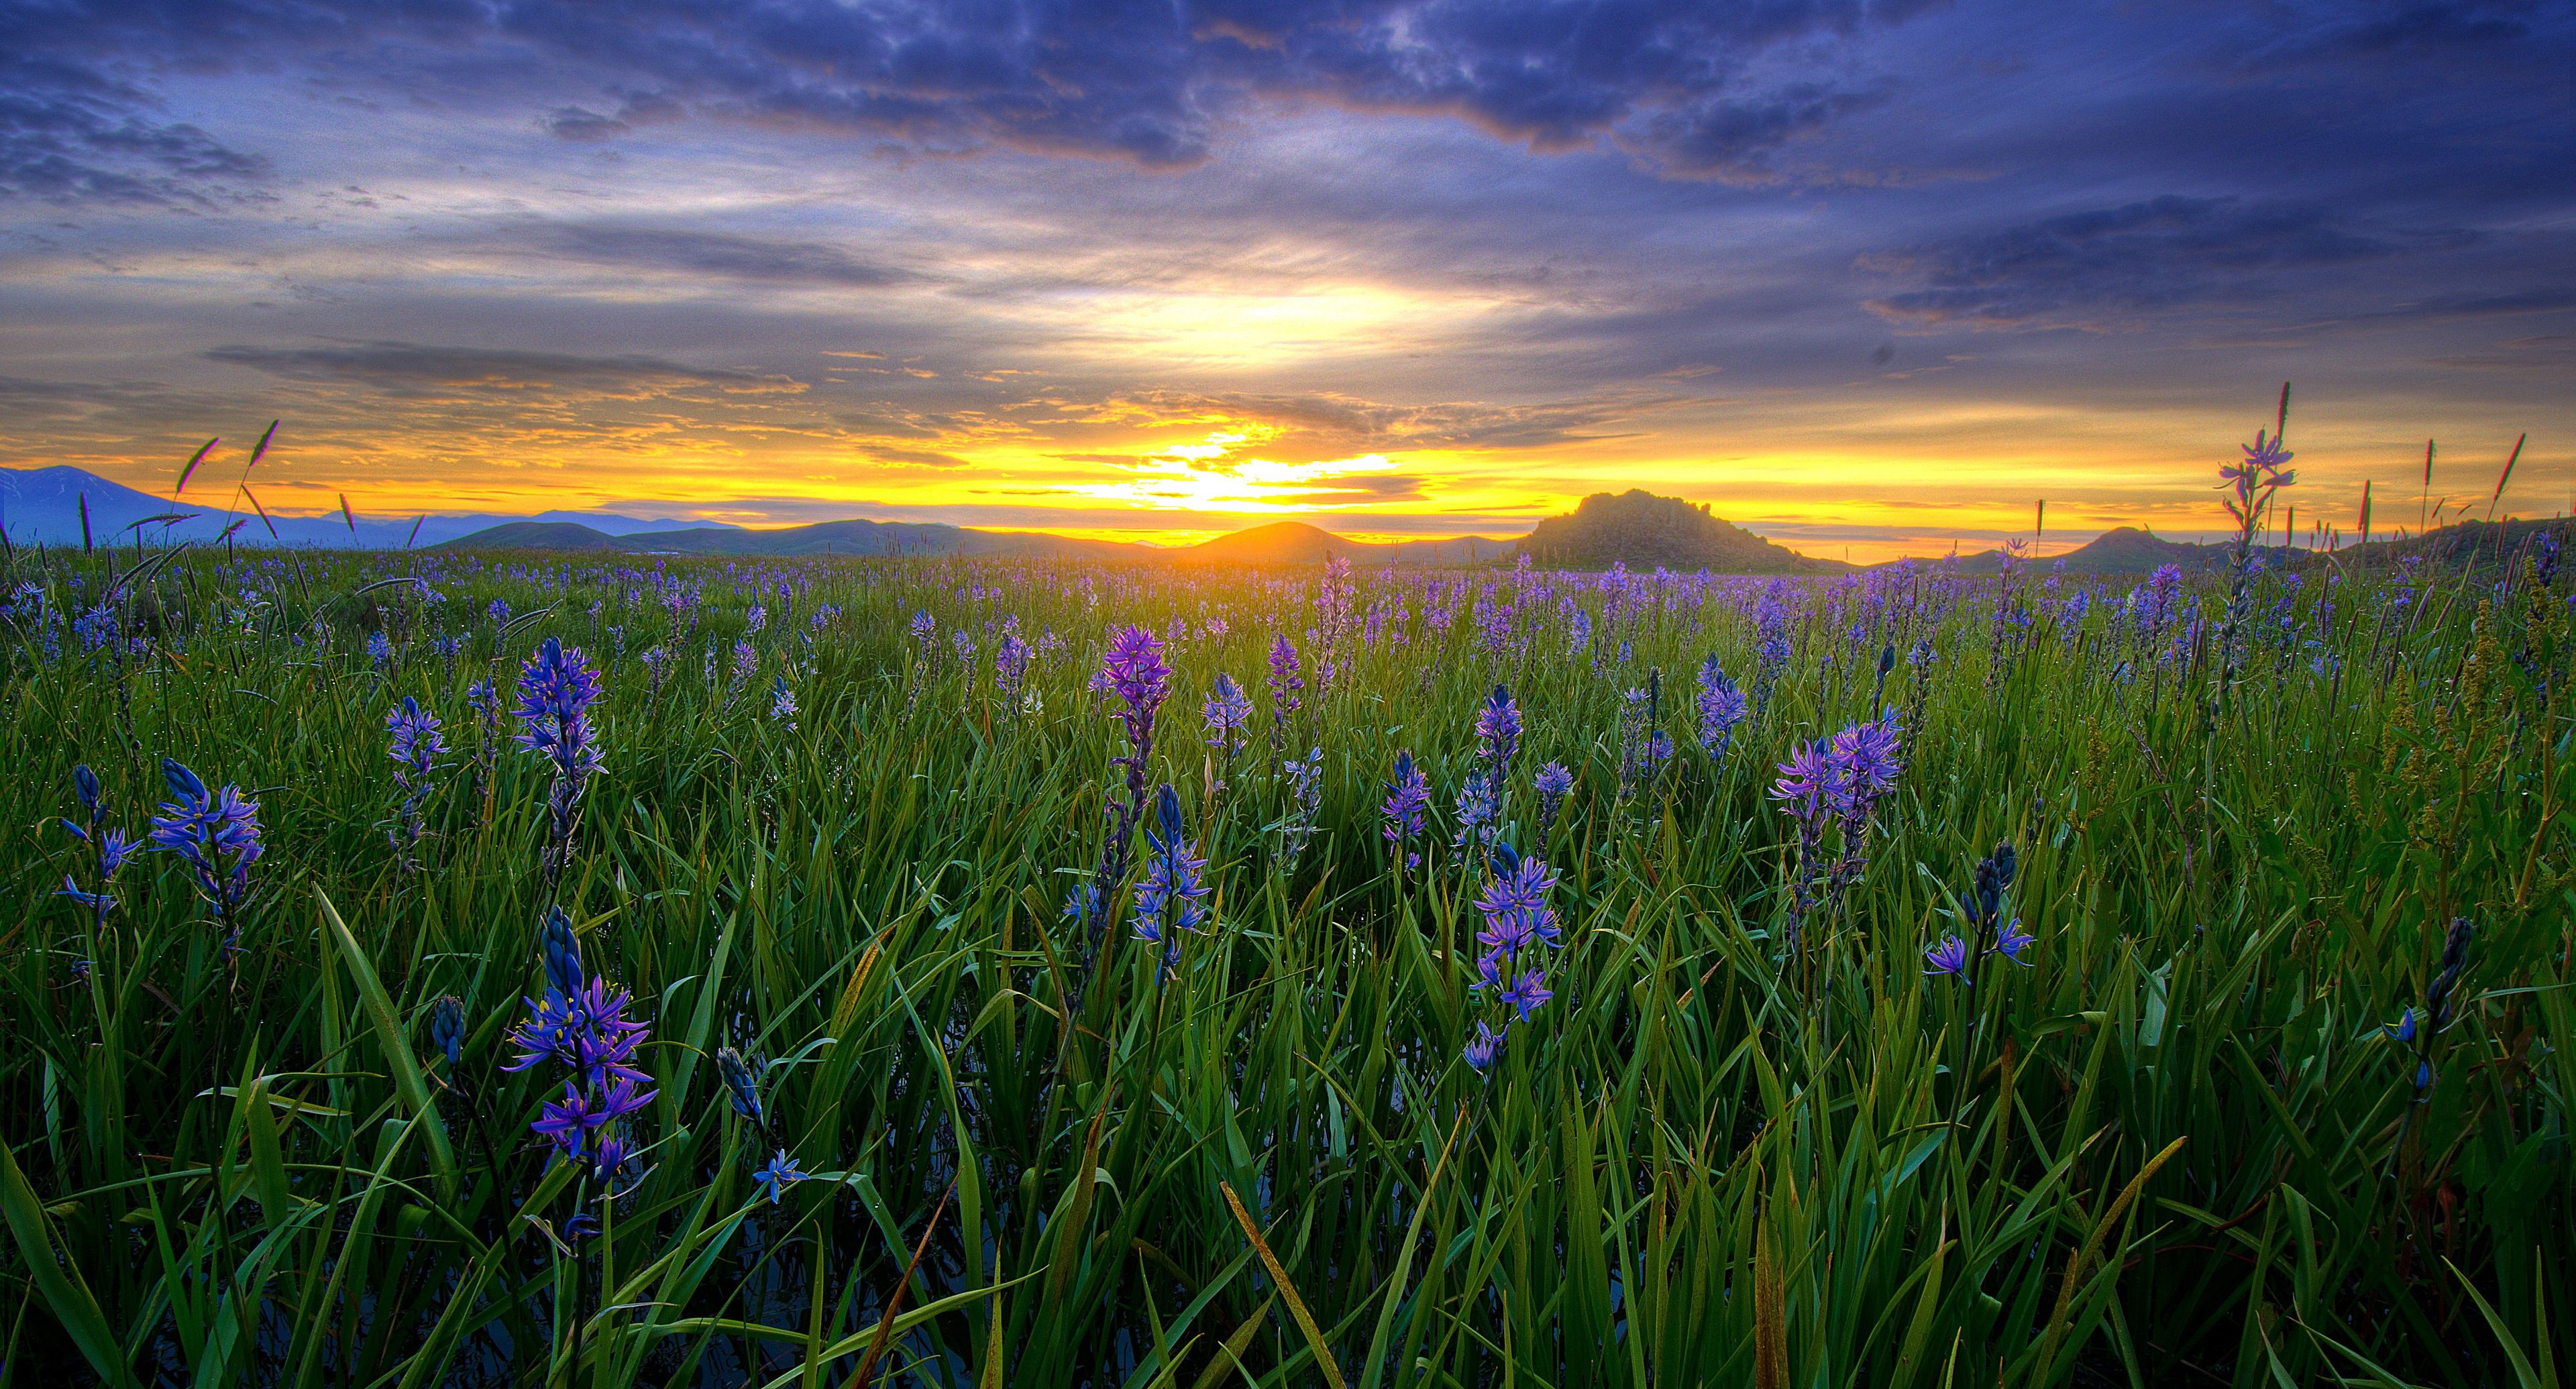 Small purple flowers fill a field under a sunset.